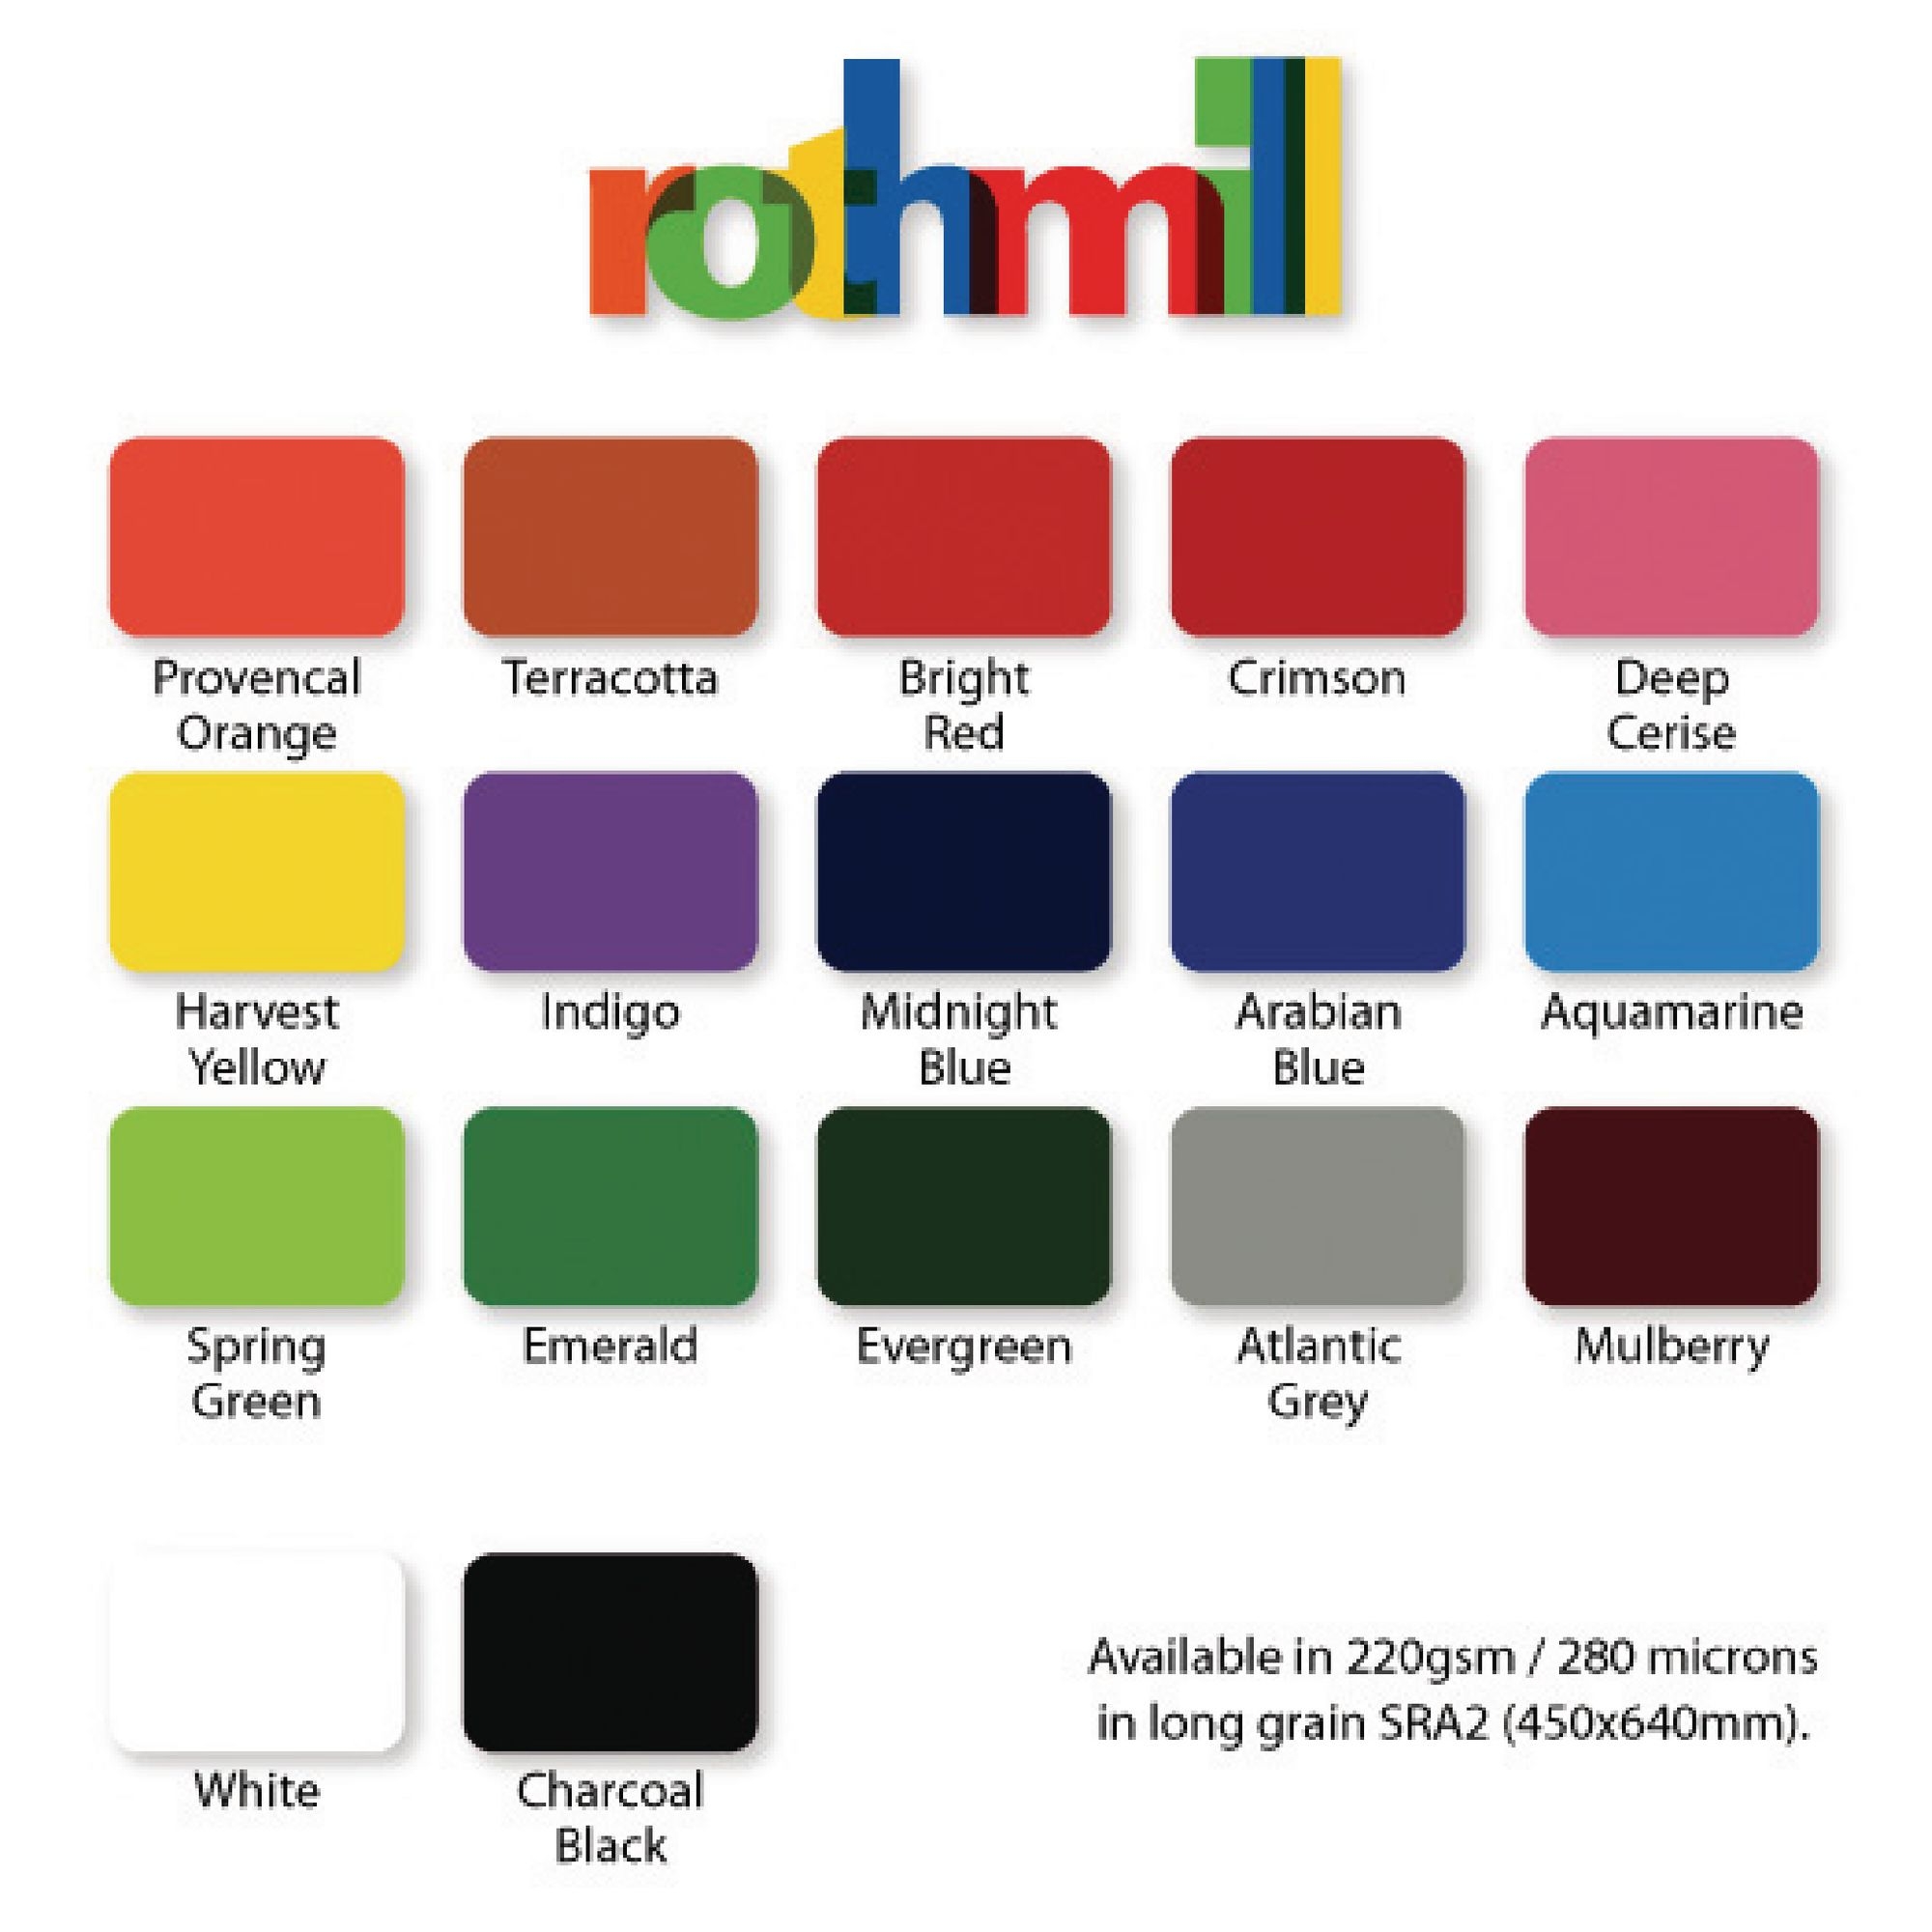 Rothmill A4 Brilliant Colour Card - Charcoal black